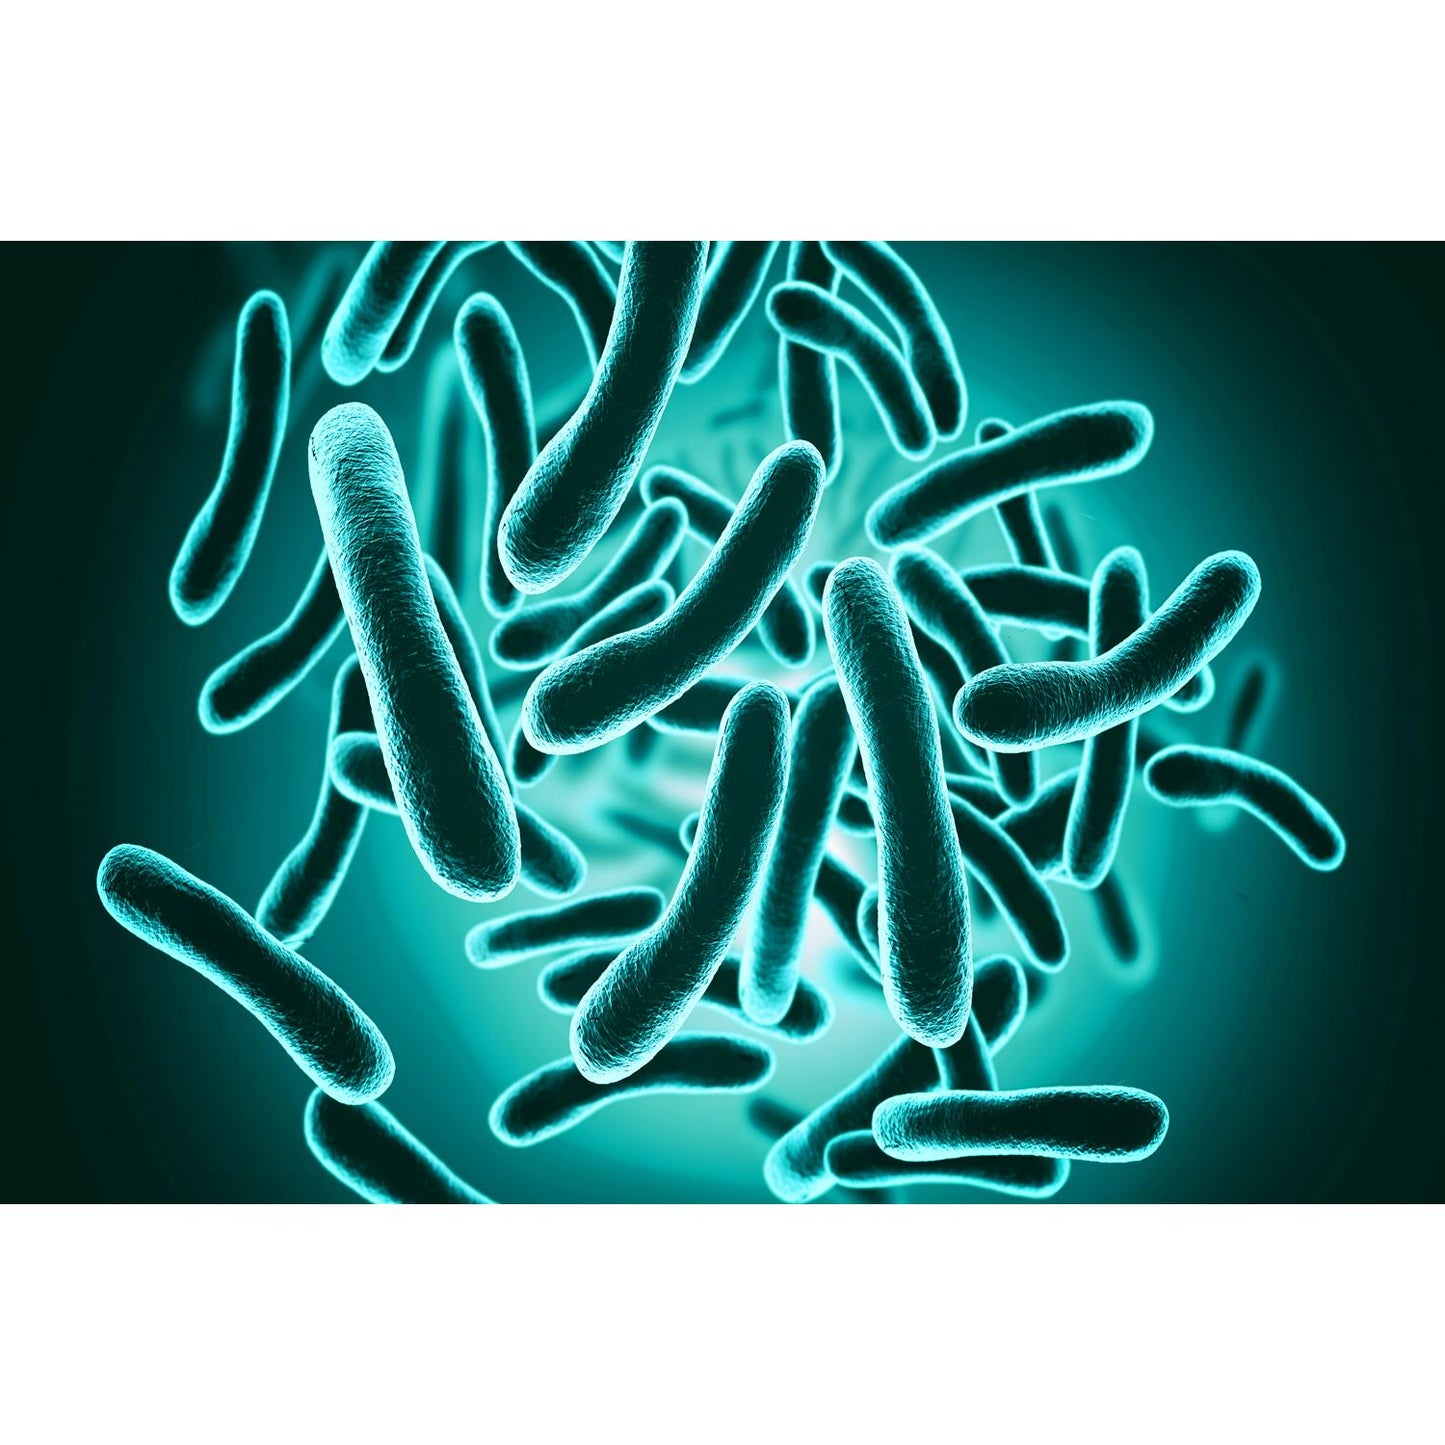 Medical Office Art - Bacteria closeup